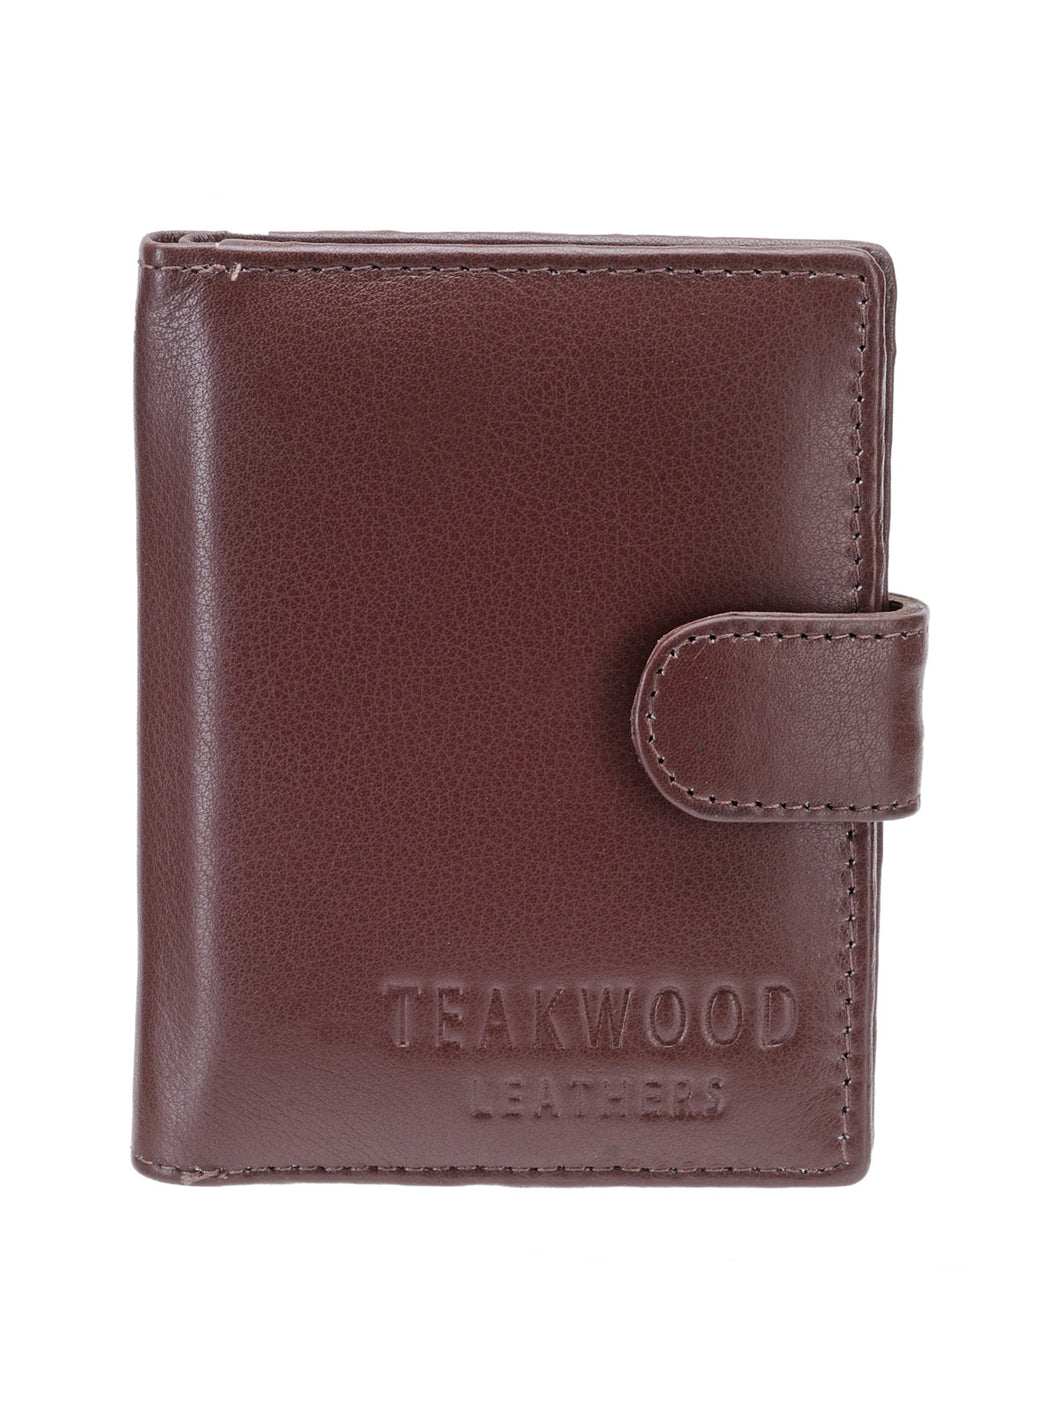 Teakwood Genuine Leather Wallet - Wine